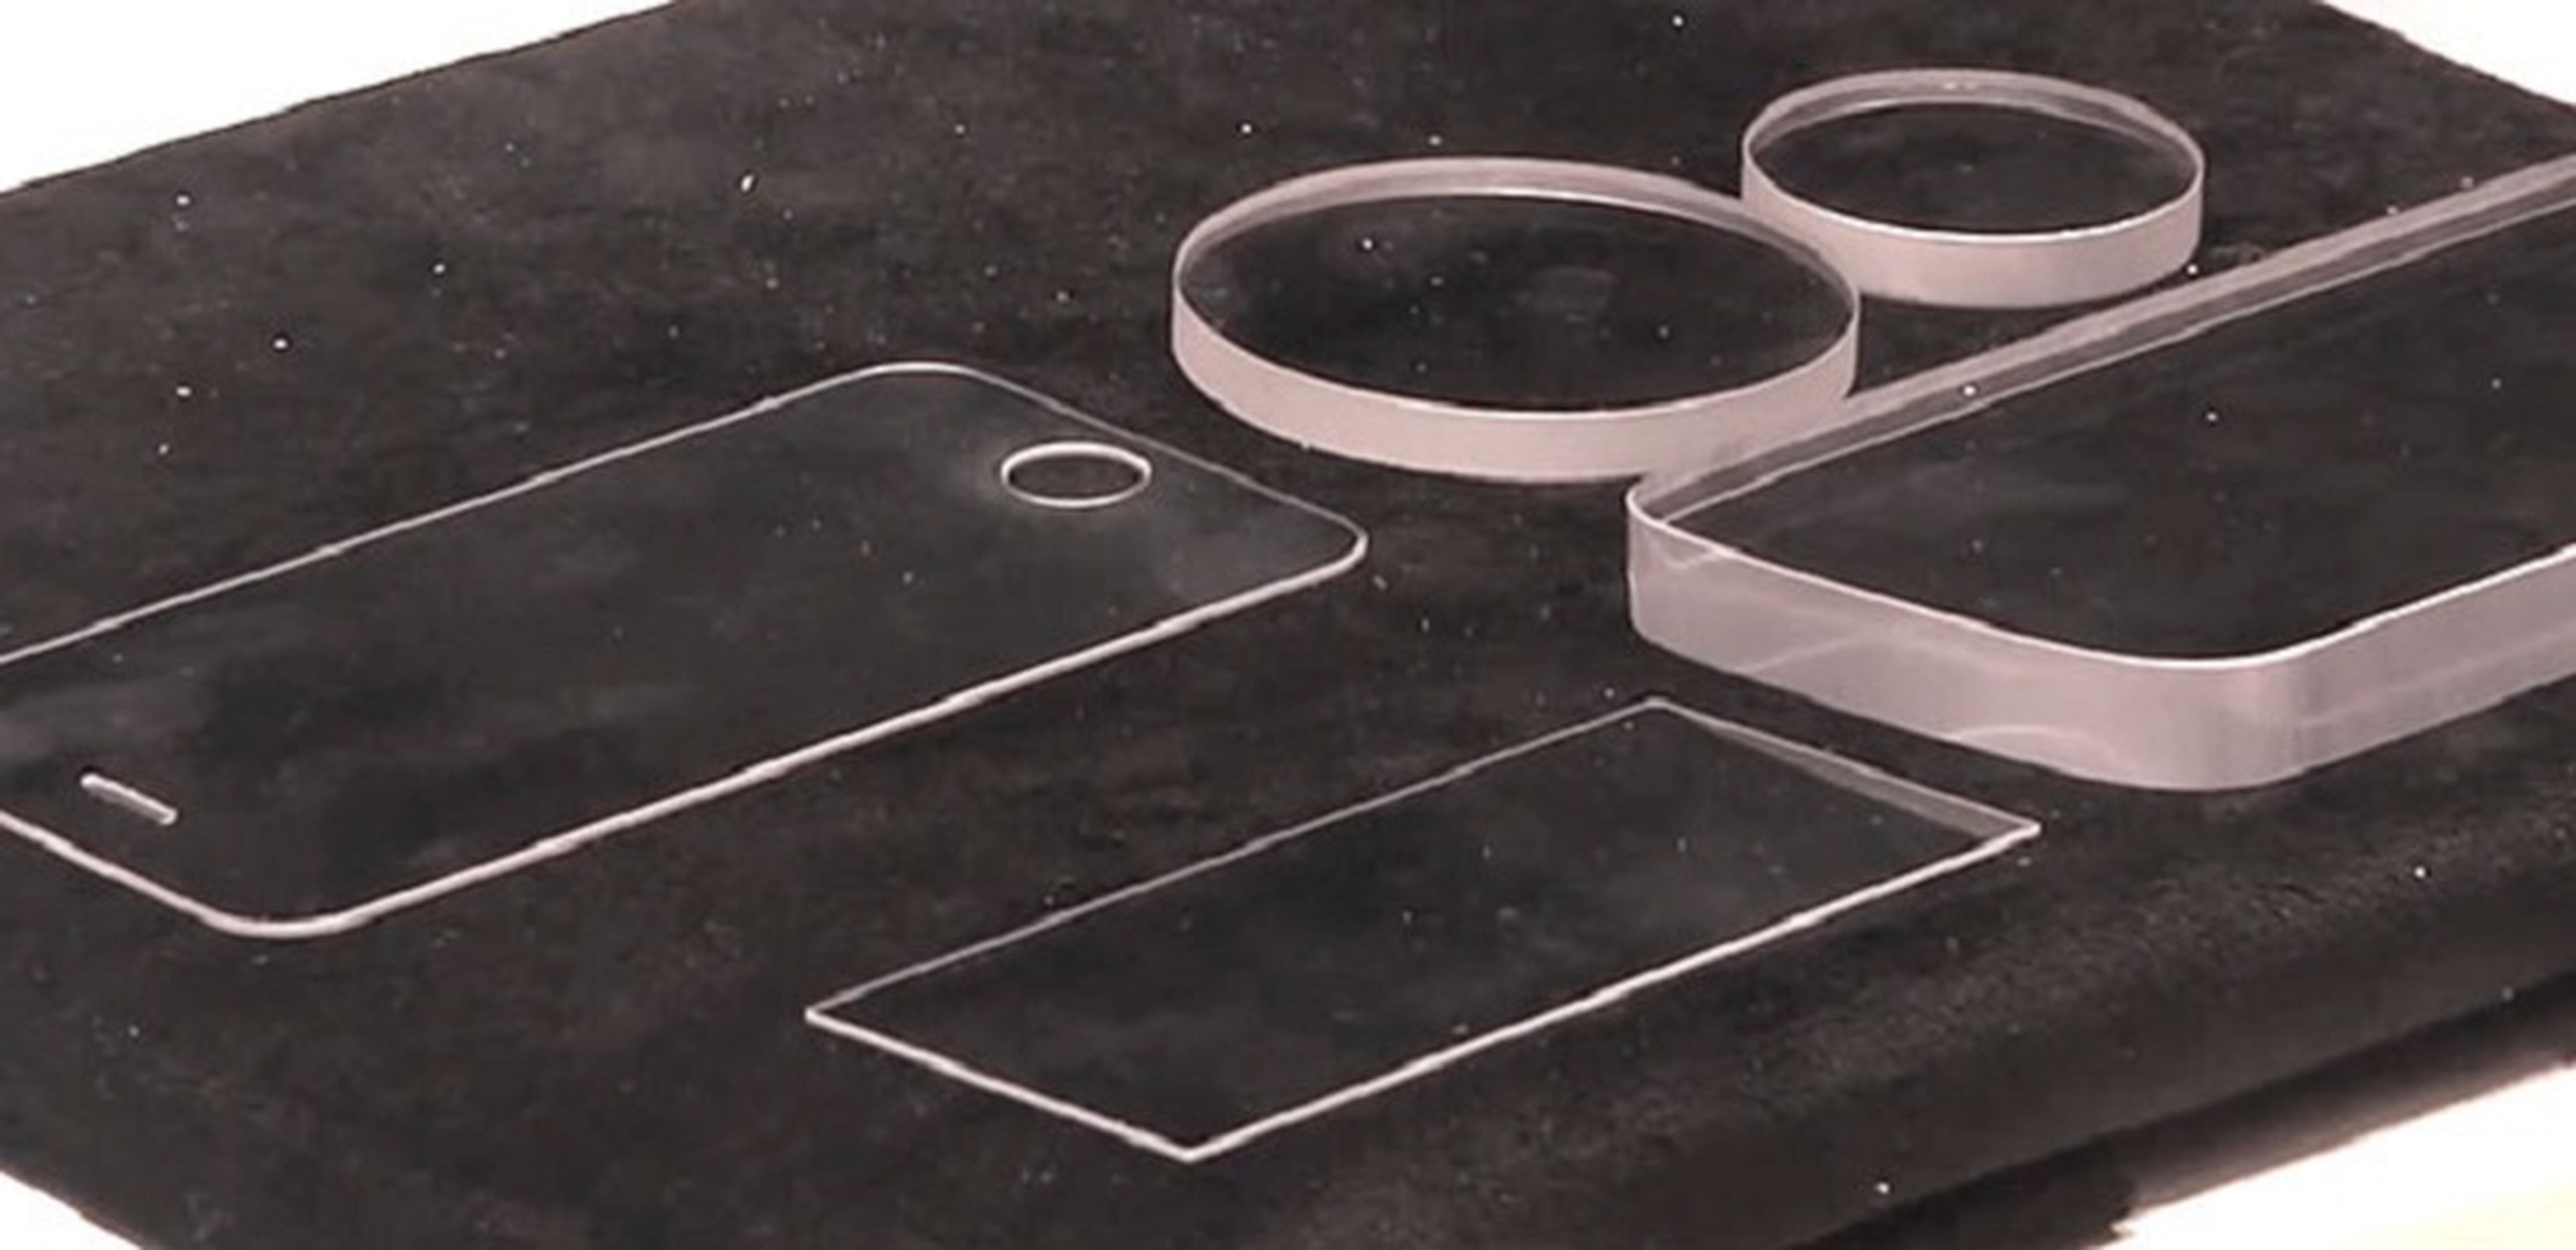 Apple cristal zafiro iPhone 6 iWatch